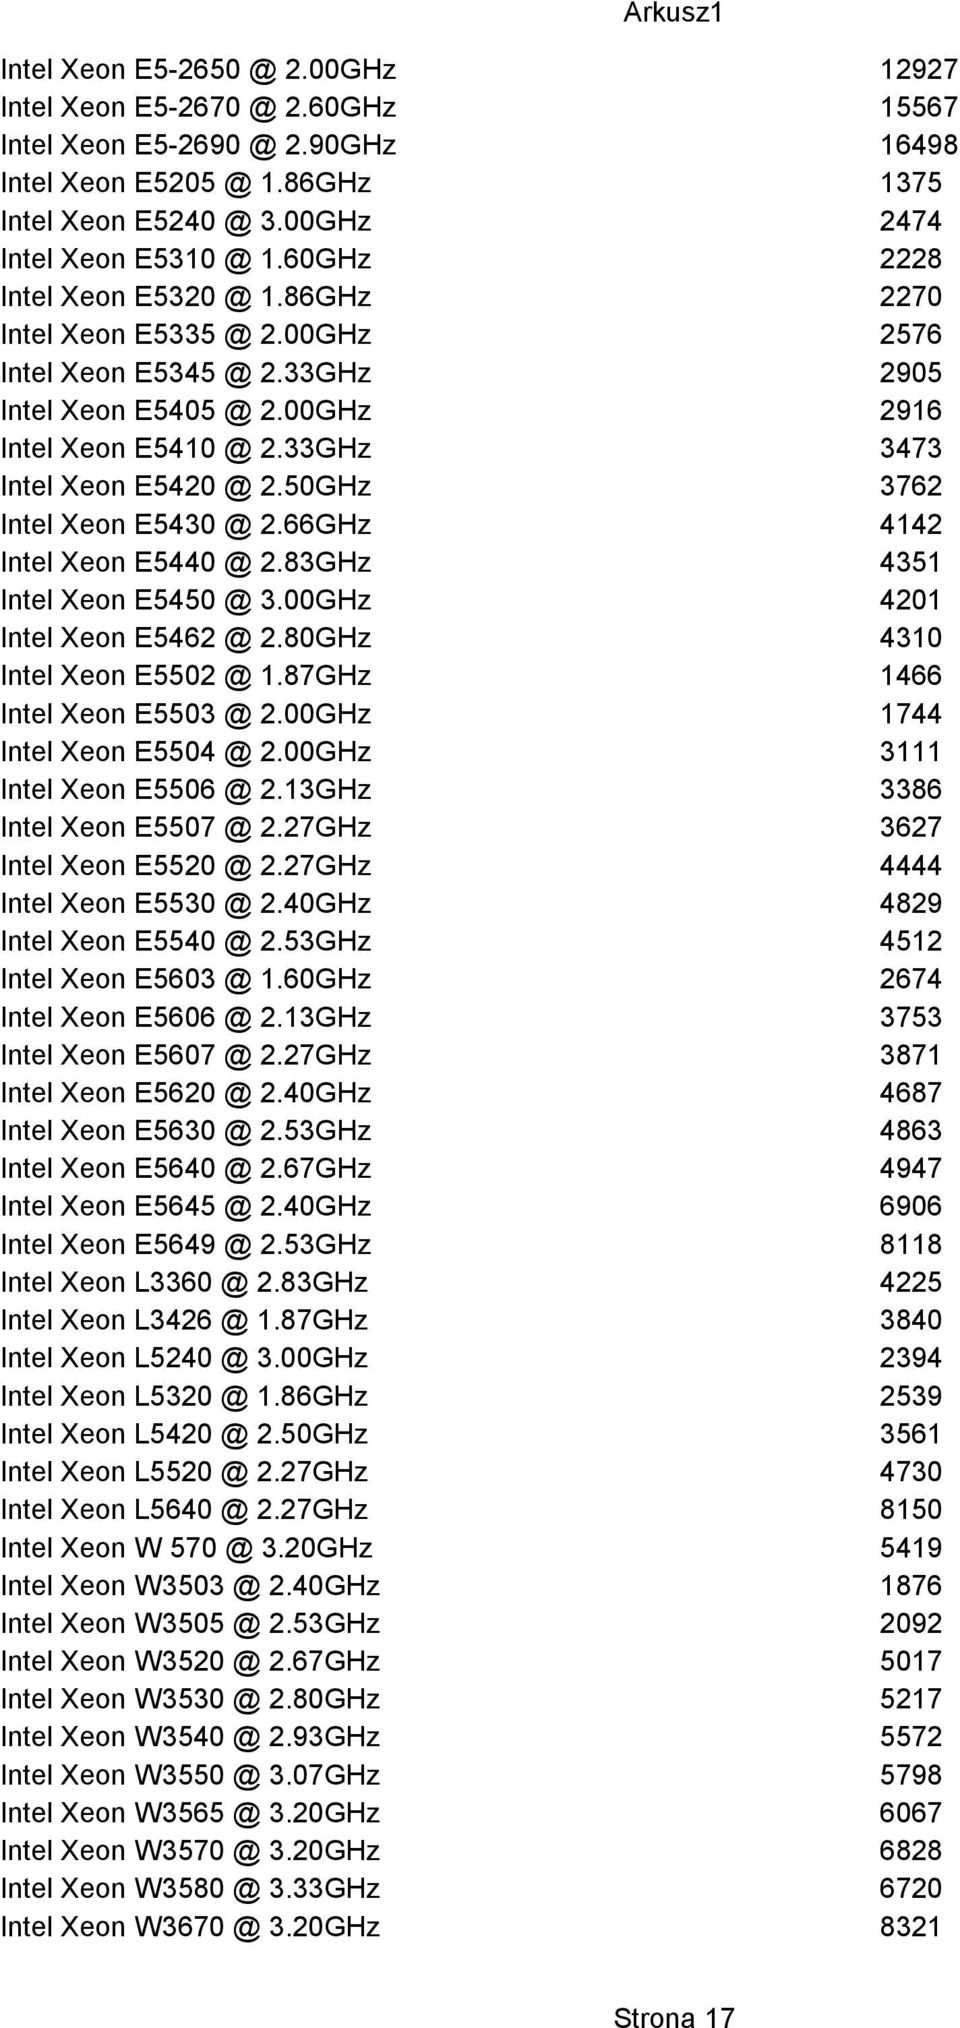 50GHz 3762 Intel Xeon E5430 @ 2.66GHz 4142 Intel Xeon E5440 @ 2.83GHz 4351 Intel Xeon E5450 @ 3.00GHz 4201 Intel Xeon E5462 @ 2.80GHz 4310 Intel Xeon E5502 @ 1.87GHz 1466 Intel Xeon E5503 @ 2.